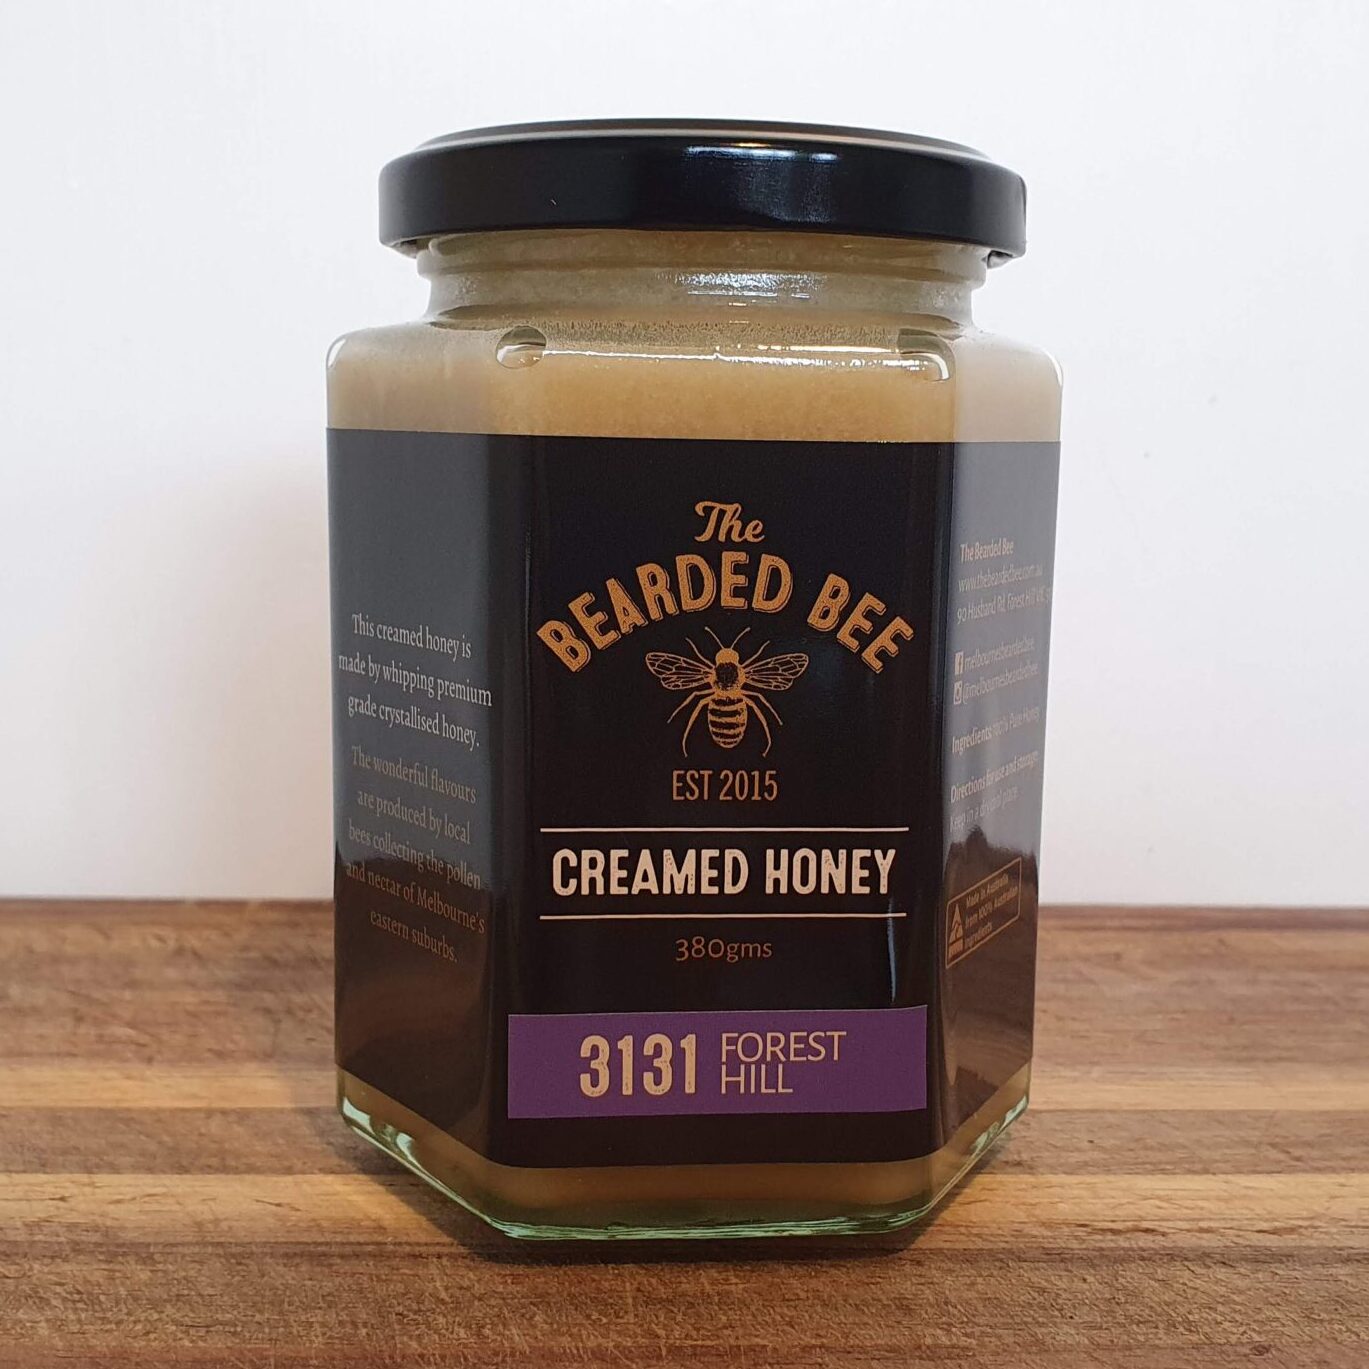 Creamed honey